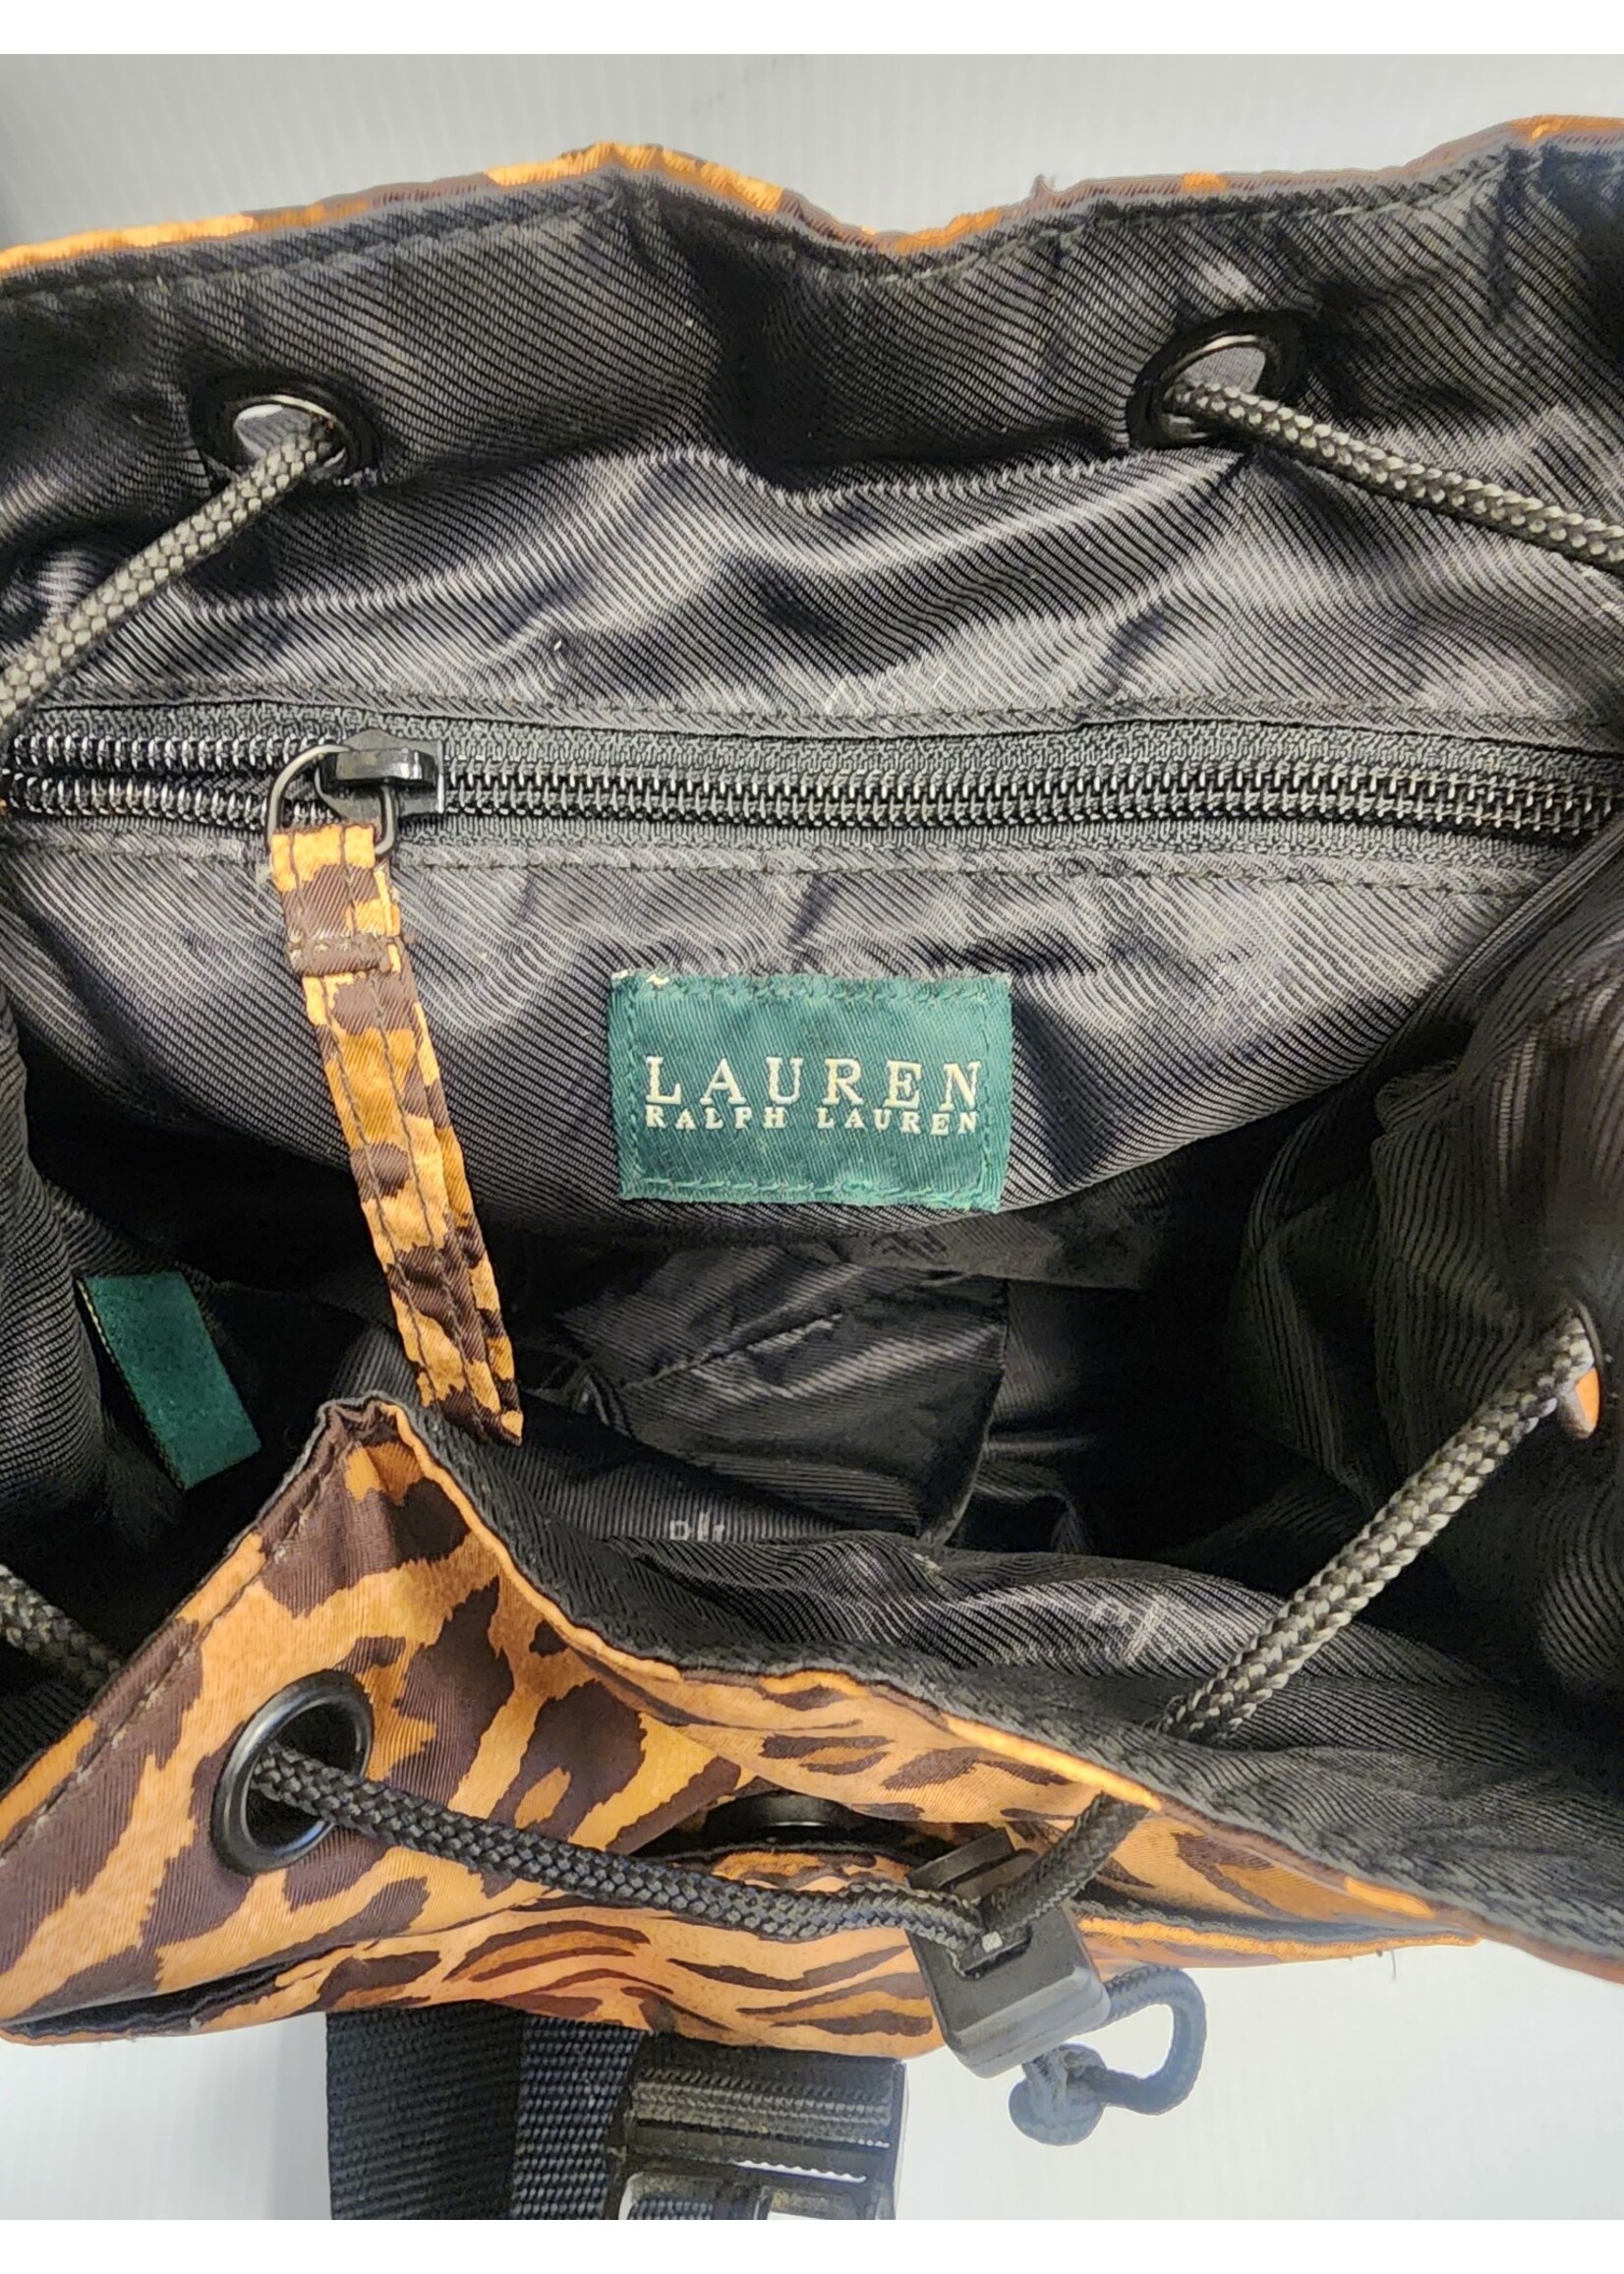 Amazon.com | LELE LIFE Drawstring Backpack Bag Water-Resistant Large String  Cinch Bag with Wet Pocket & Long Handles Gym Bag Sports Beach Sackpack,  Pink | Drawstring Bags